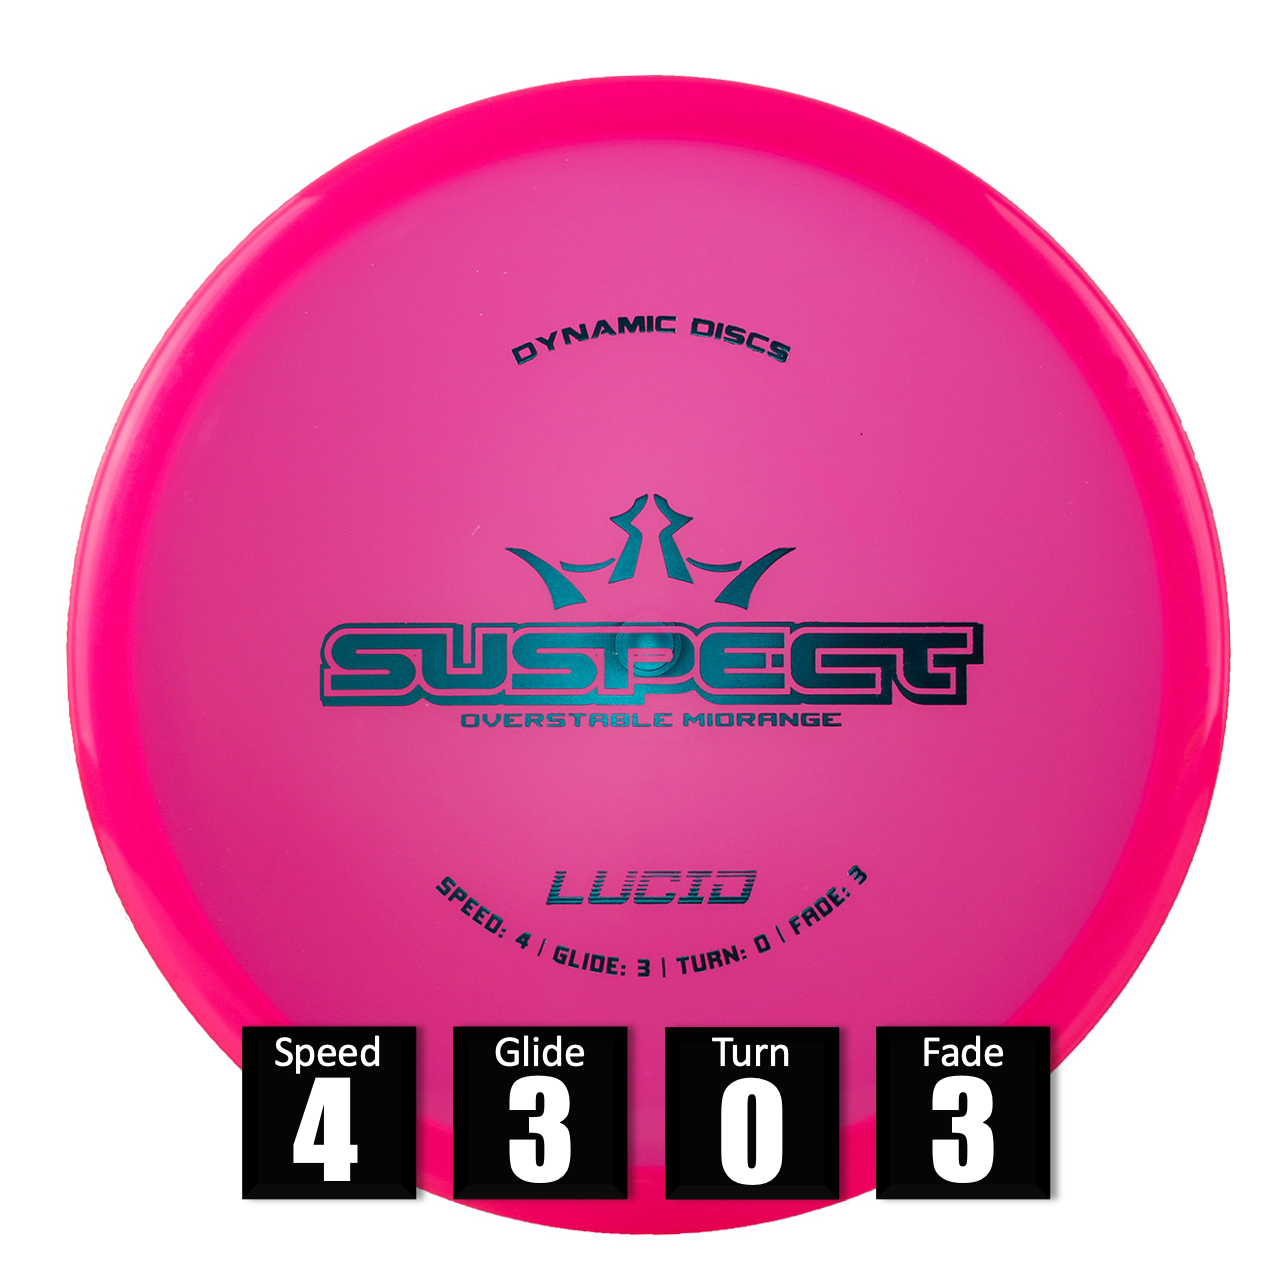 madrid-españa-spain-disc-discgolf-frisbee-disco-canasta-dynamic-discs-lucid-suspect-overstable-midrange